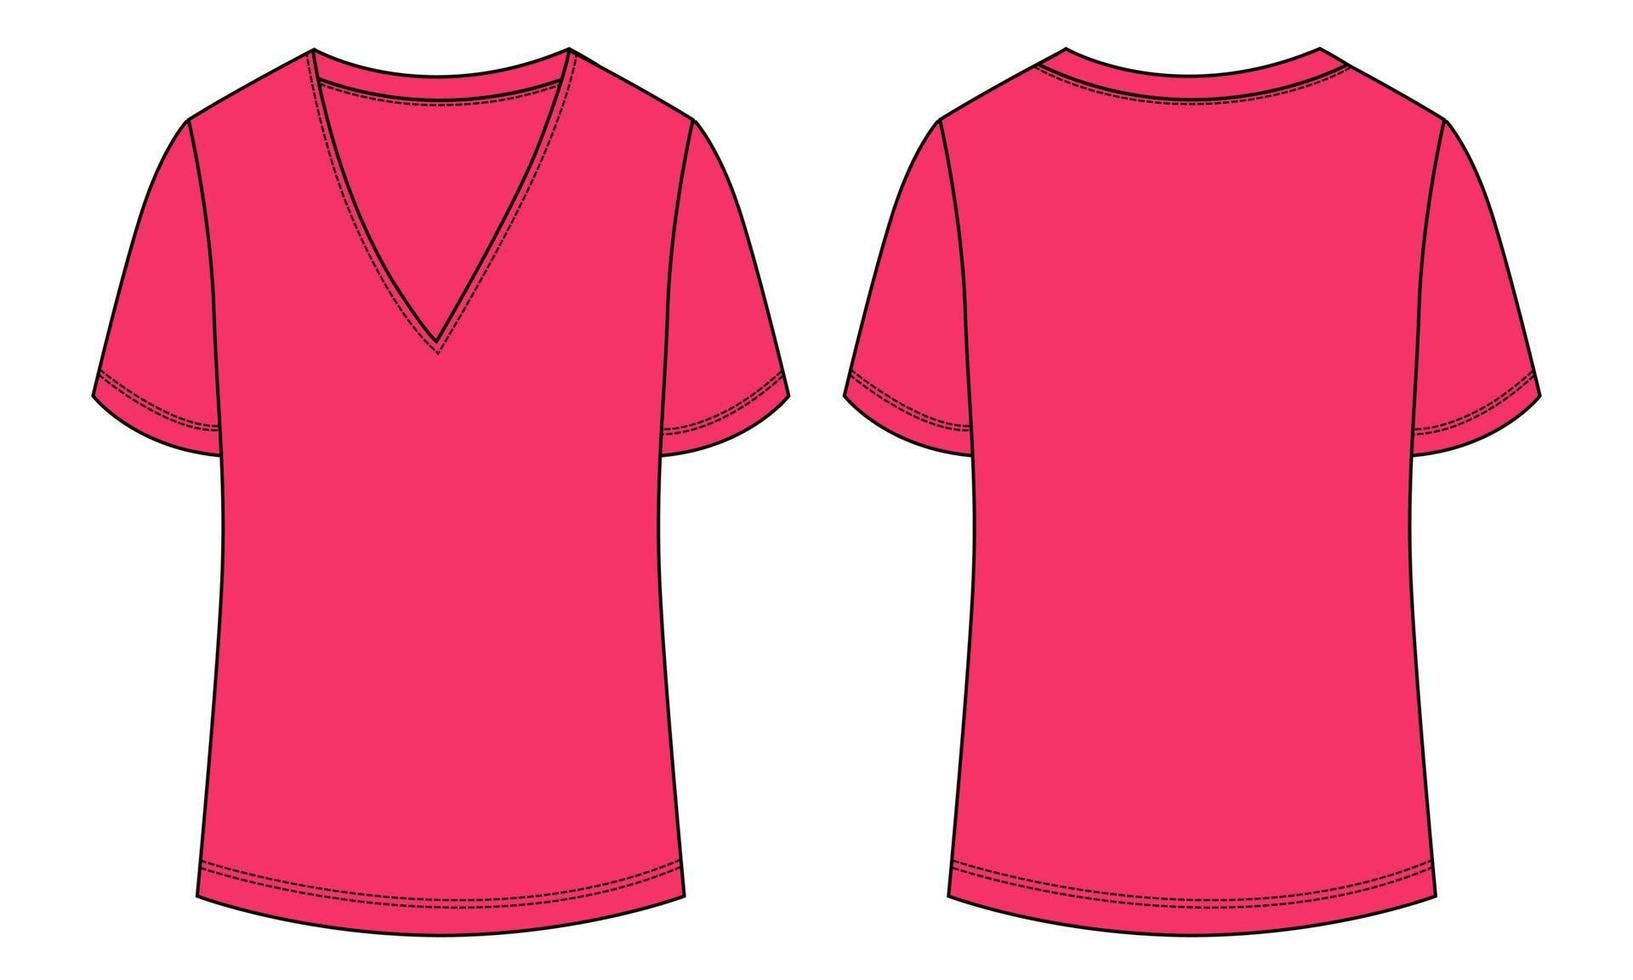 camiseta con cuello en v moda técnica boceto plano ilustración vectorial plantilla de color rosa para damas vector